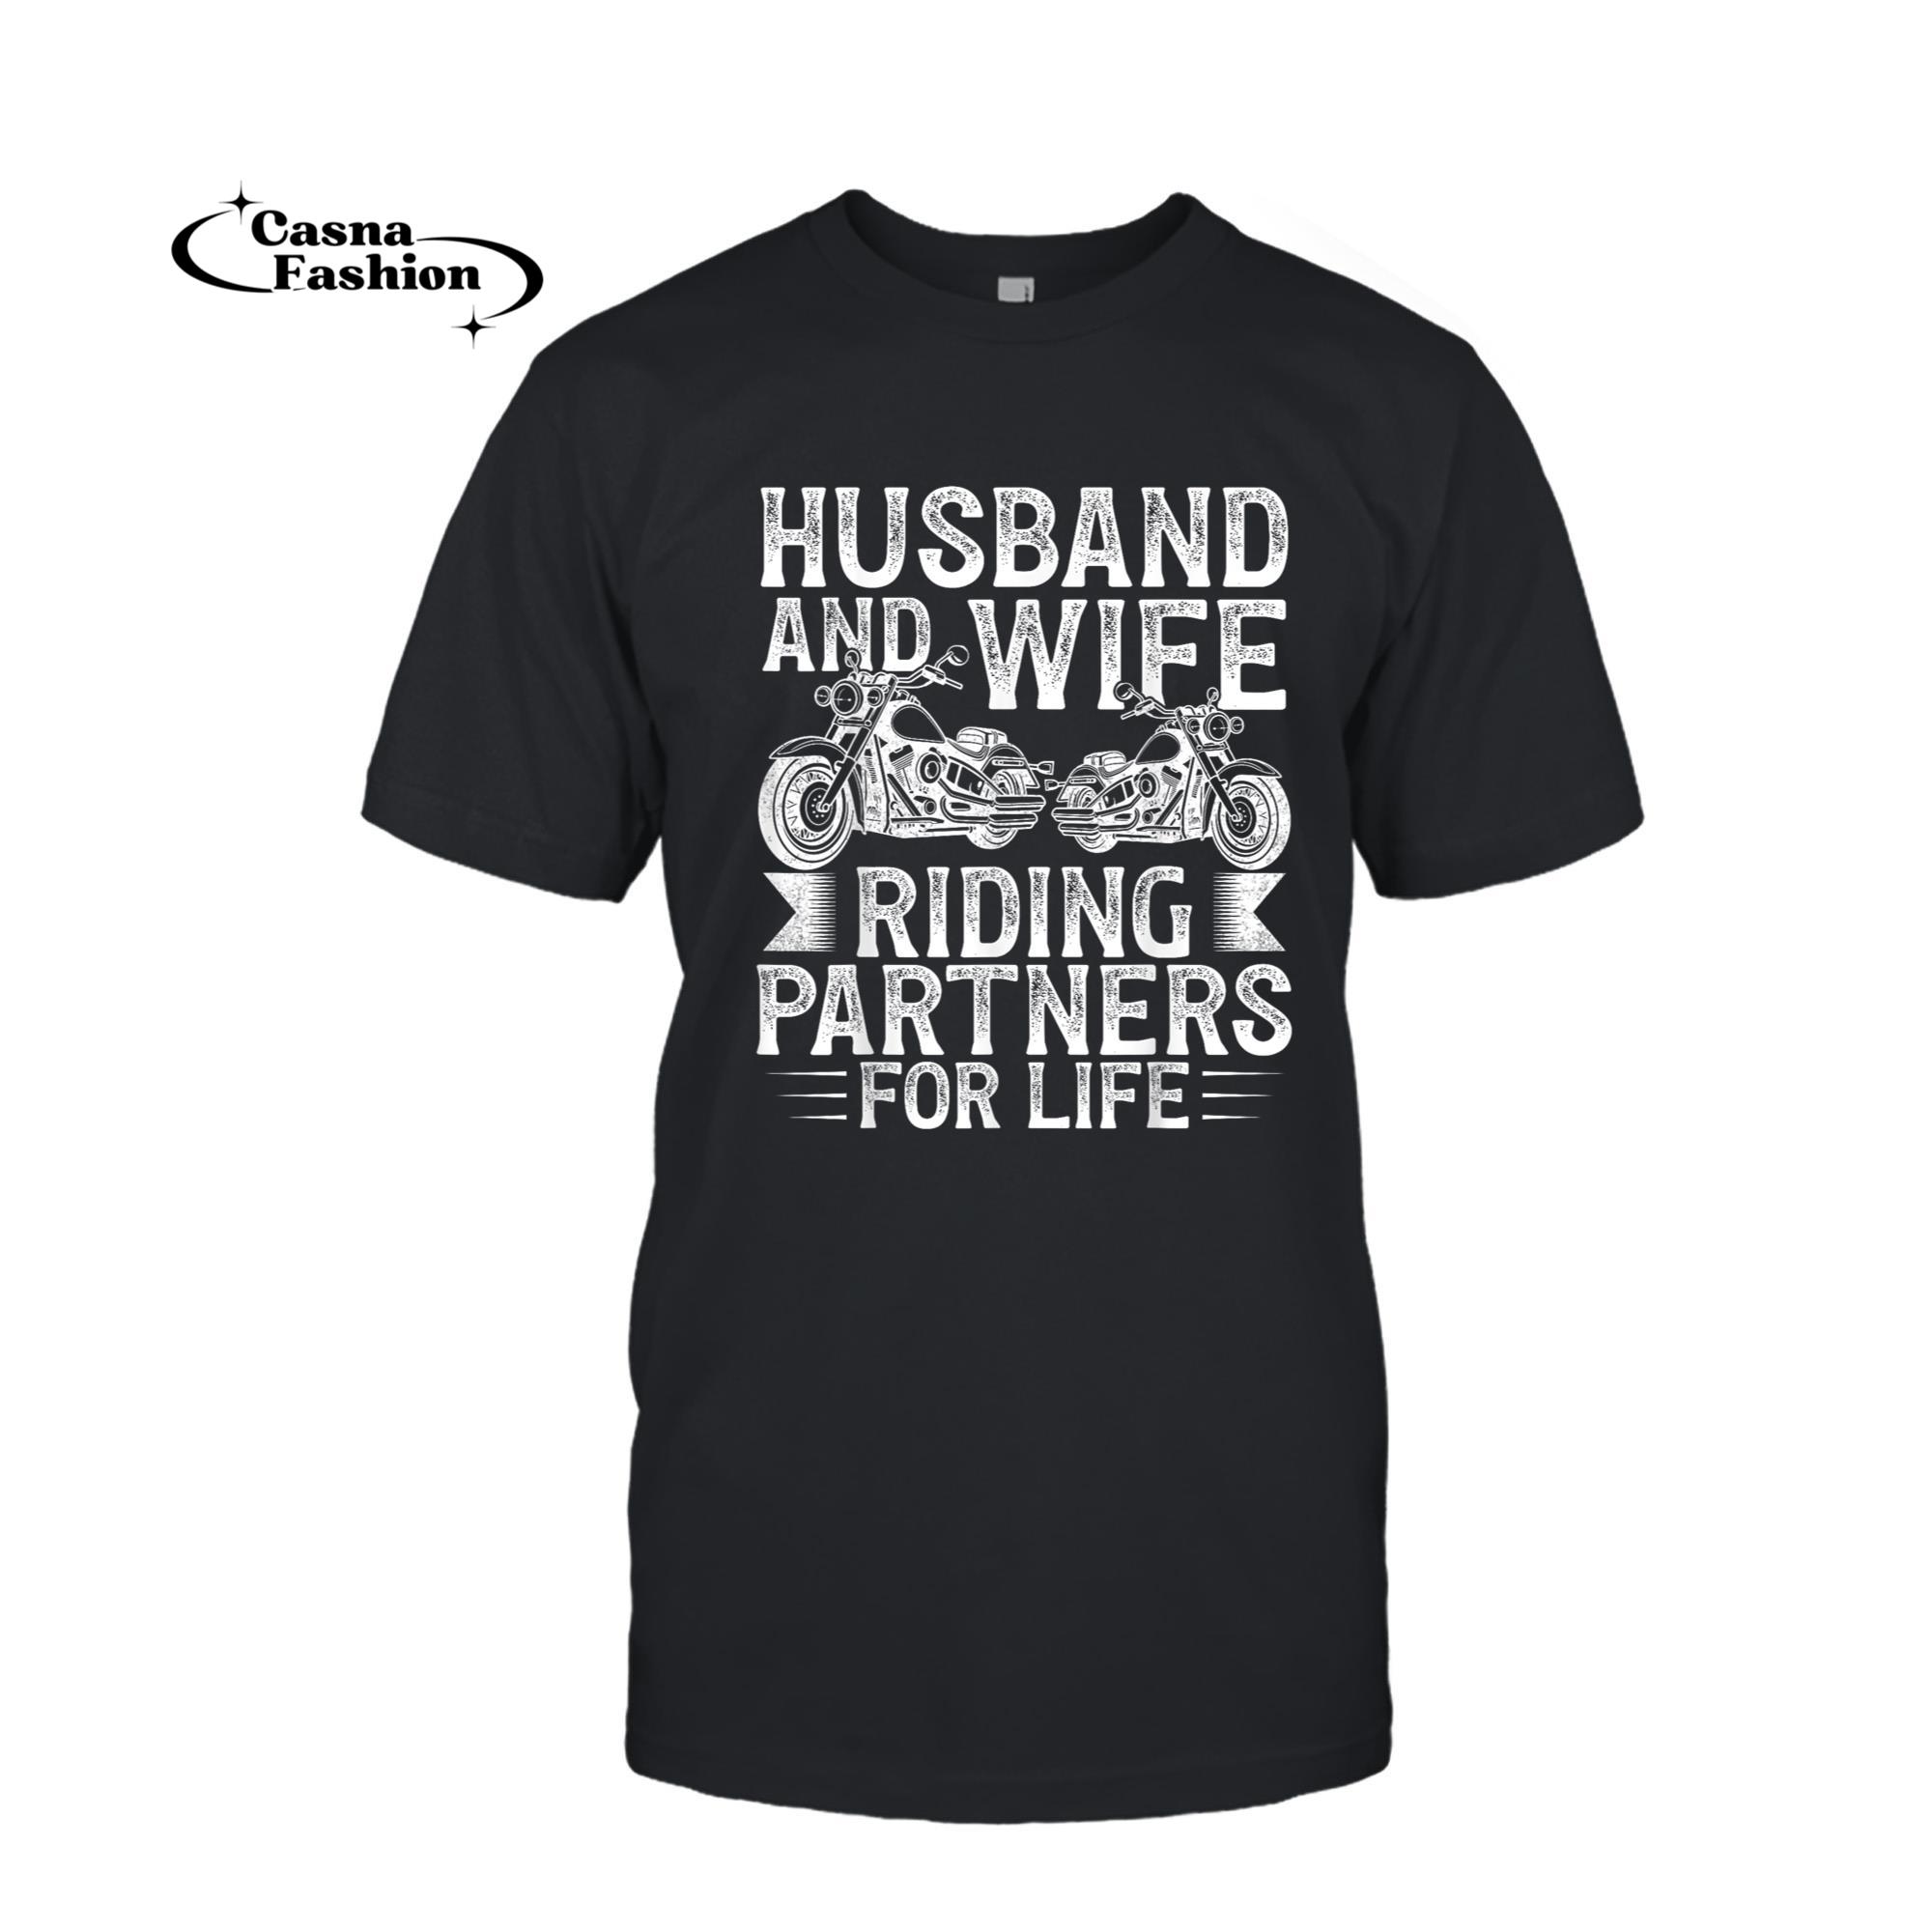 casnafashion_T-shirt_Husband And Wife Riding Partner For Life Motorcycle Biker T-Shirt_T-shirt_Black